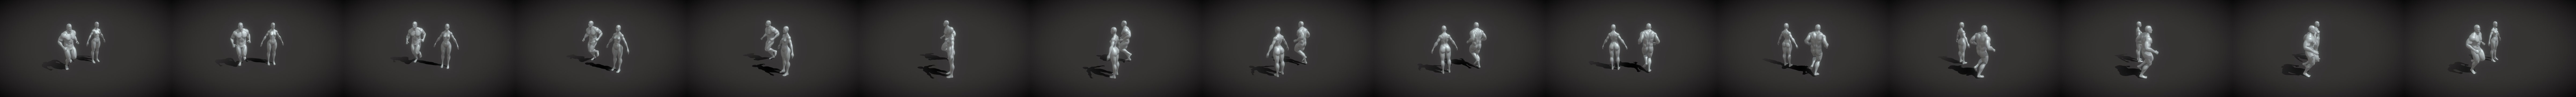 Strong-male-body-base-mesh 3D models - Sketchfab